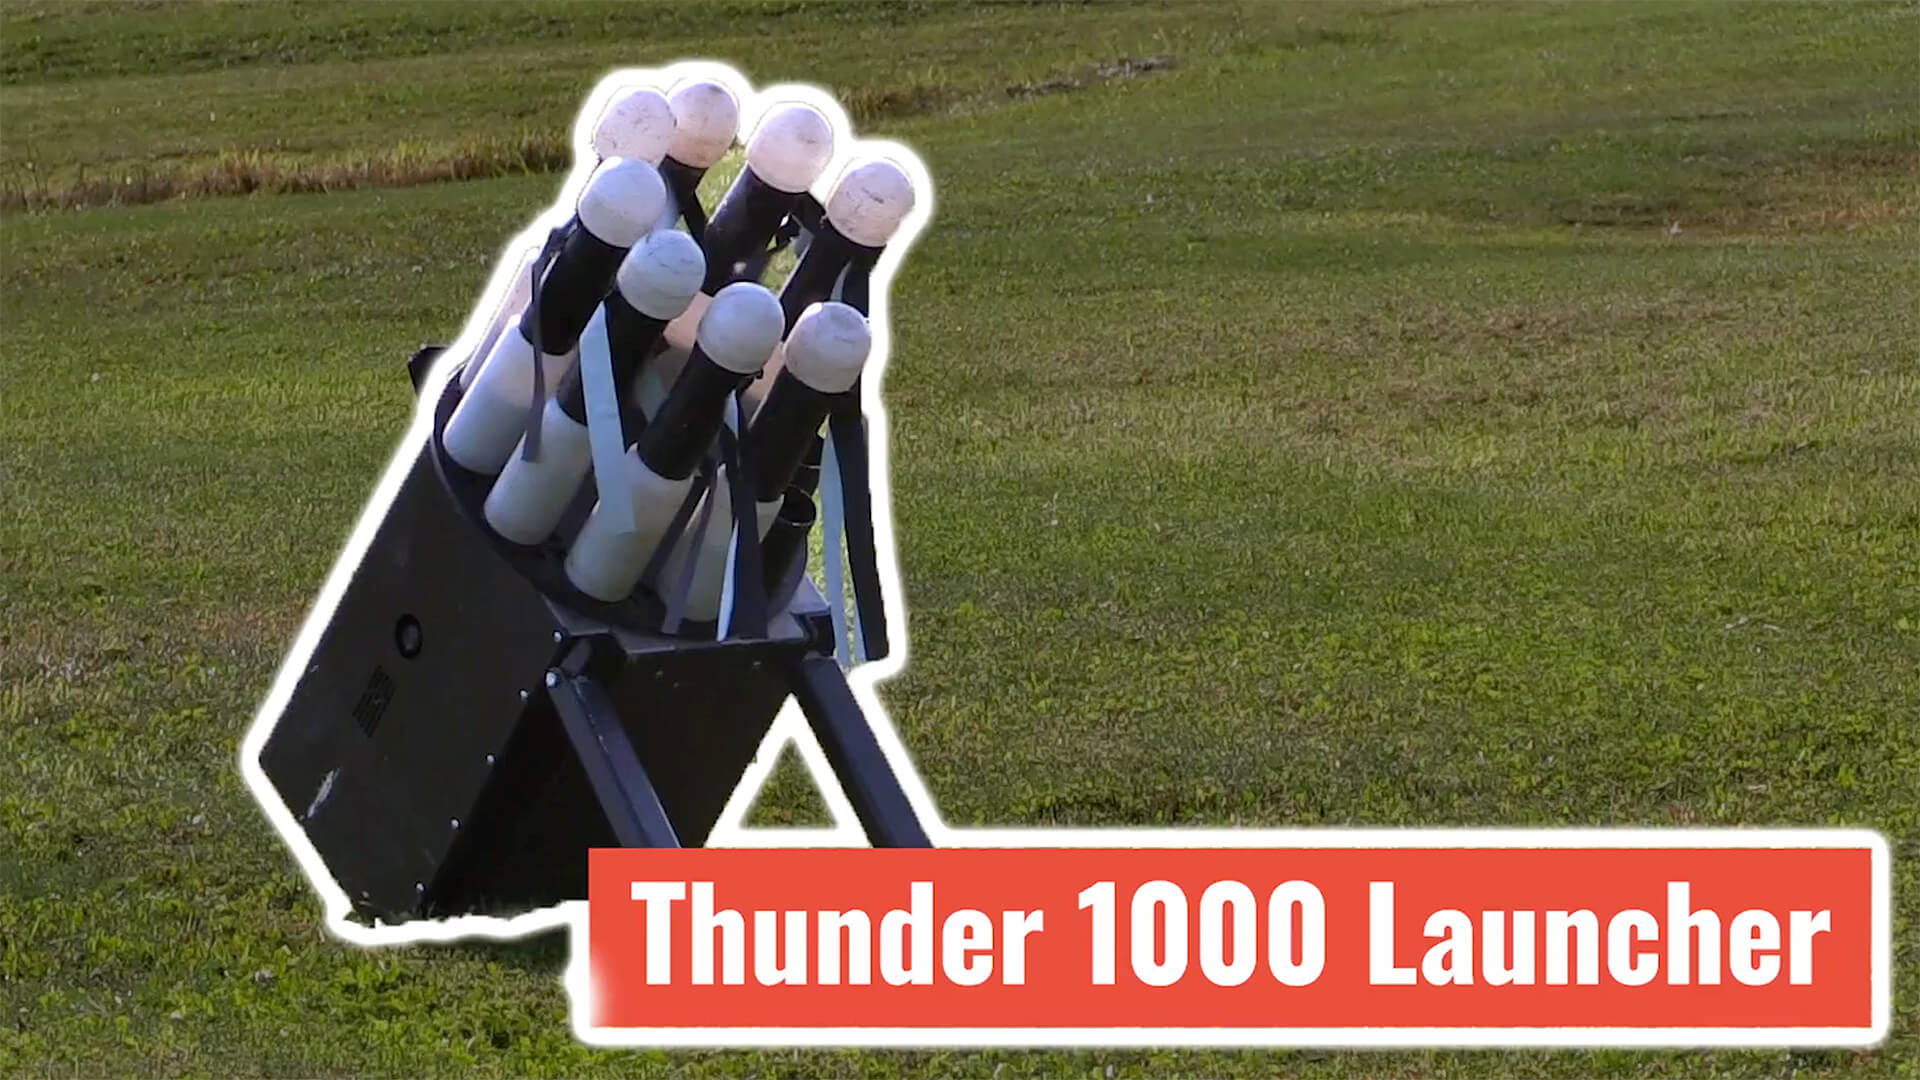 Thunder Rotating Base - Equipment for Dog Training